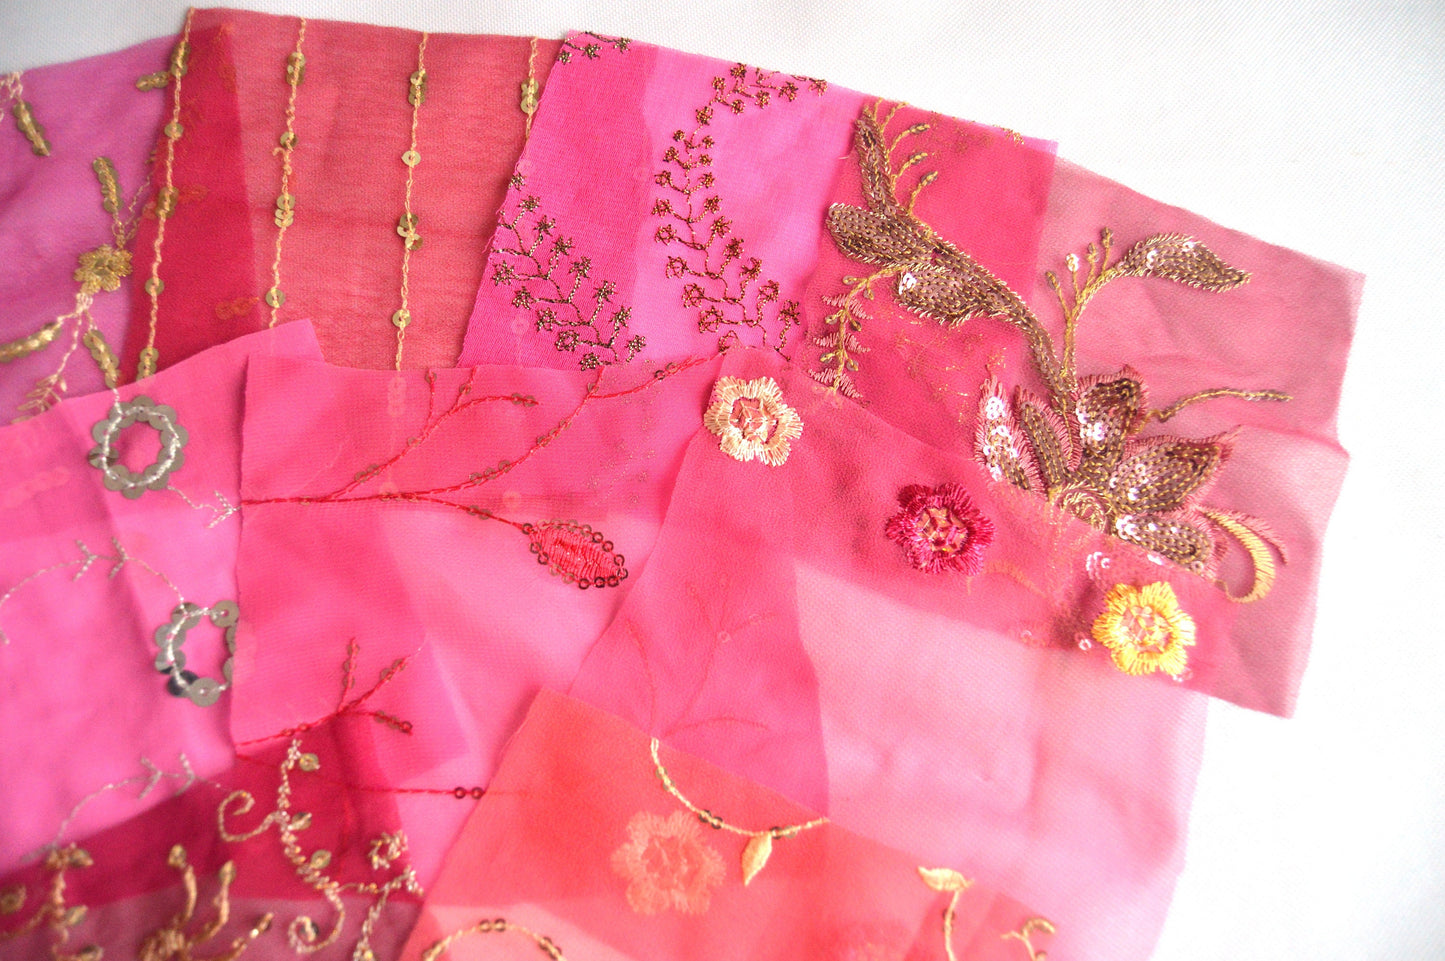 Pink Assorted Embellished Sari Fabric Remnants Scraps - 10 Pieces